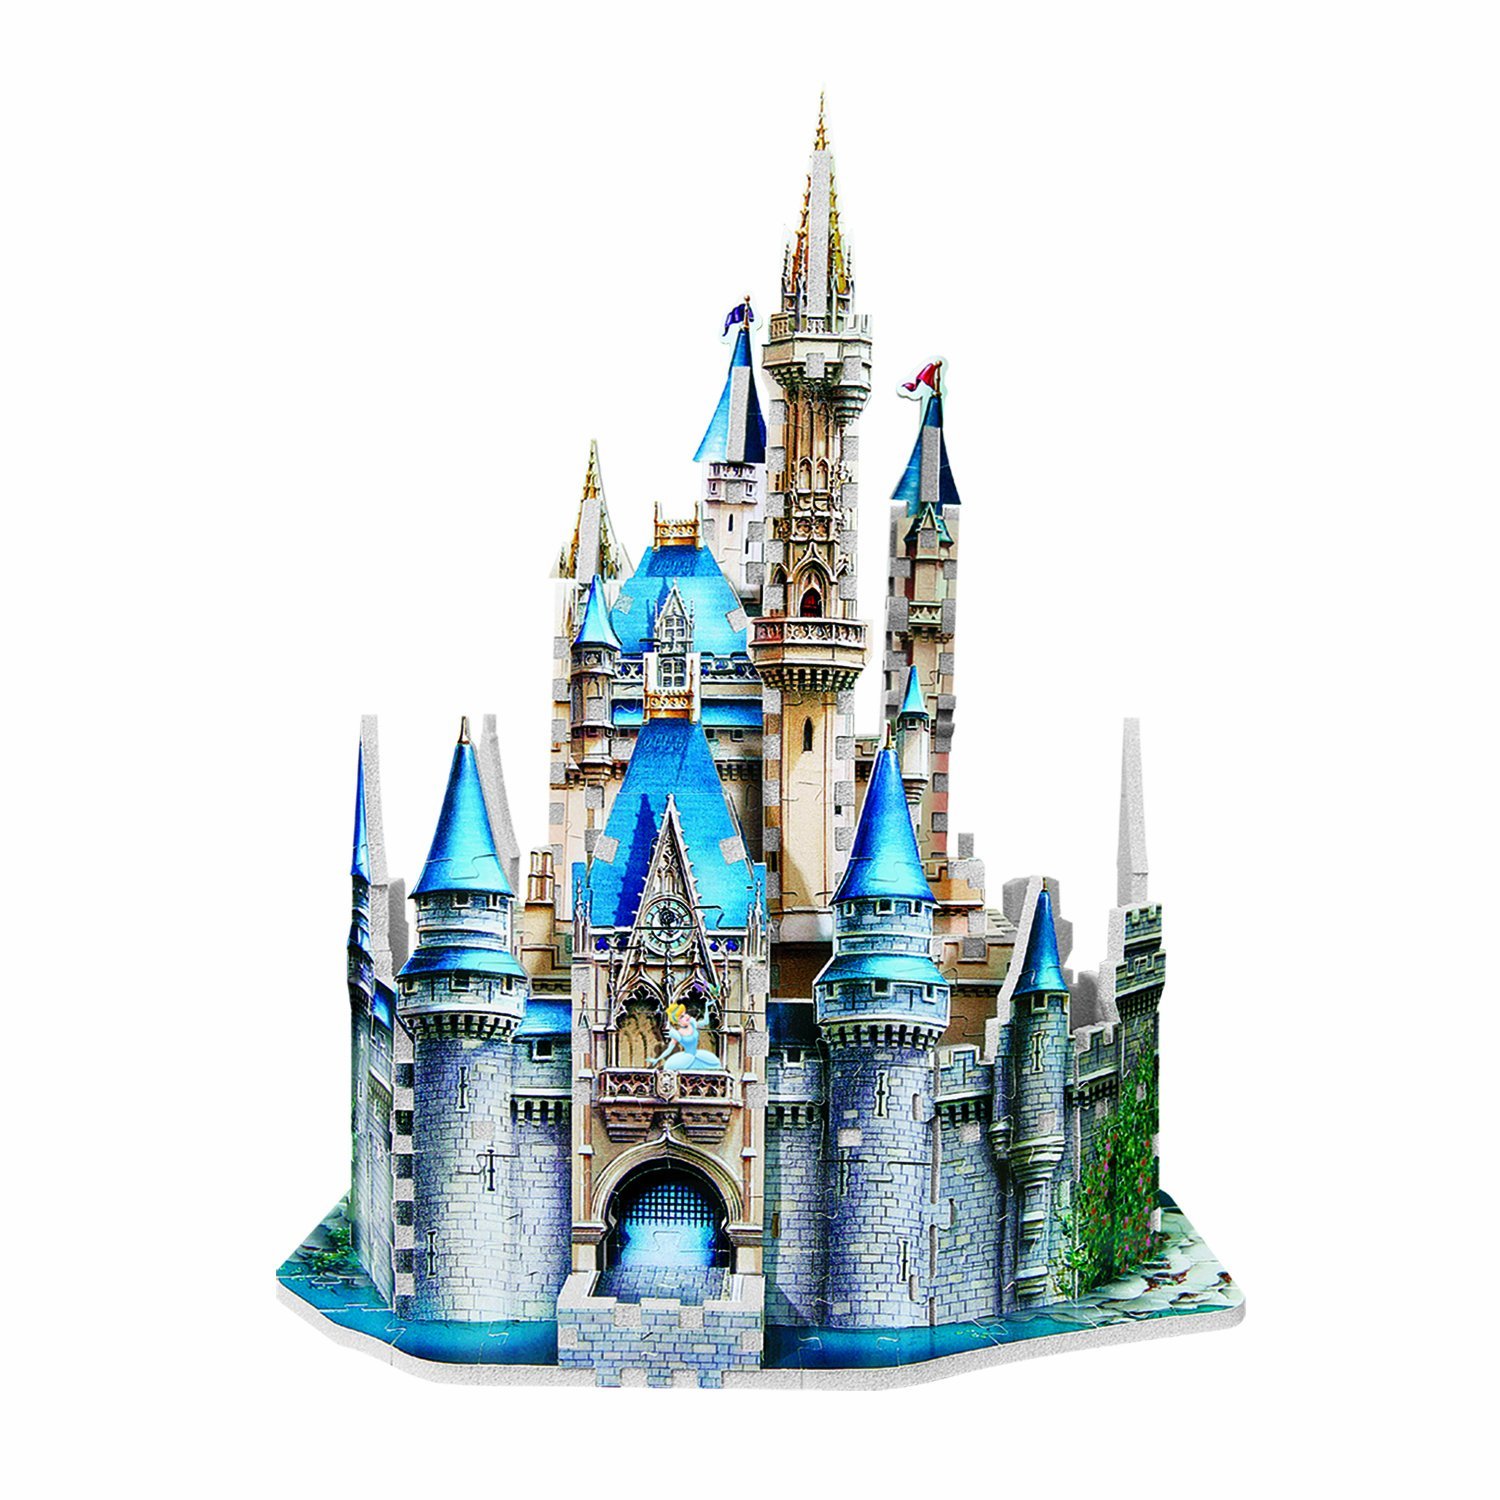 Drawn palace cinderellau0027s - Cinderella Castle Clipart